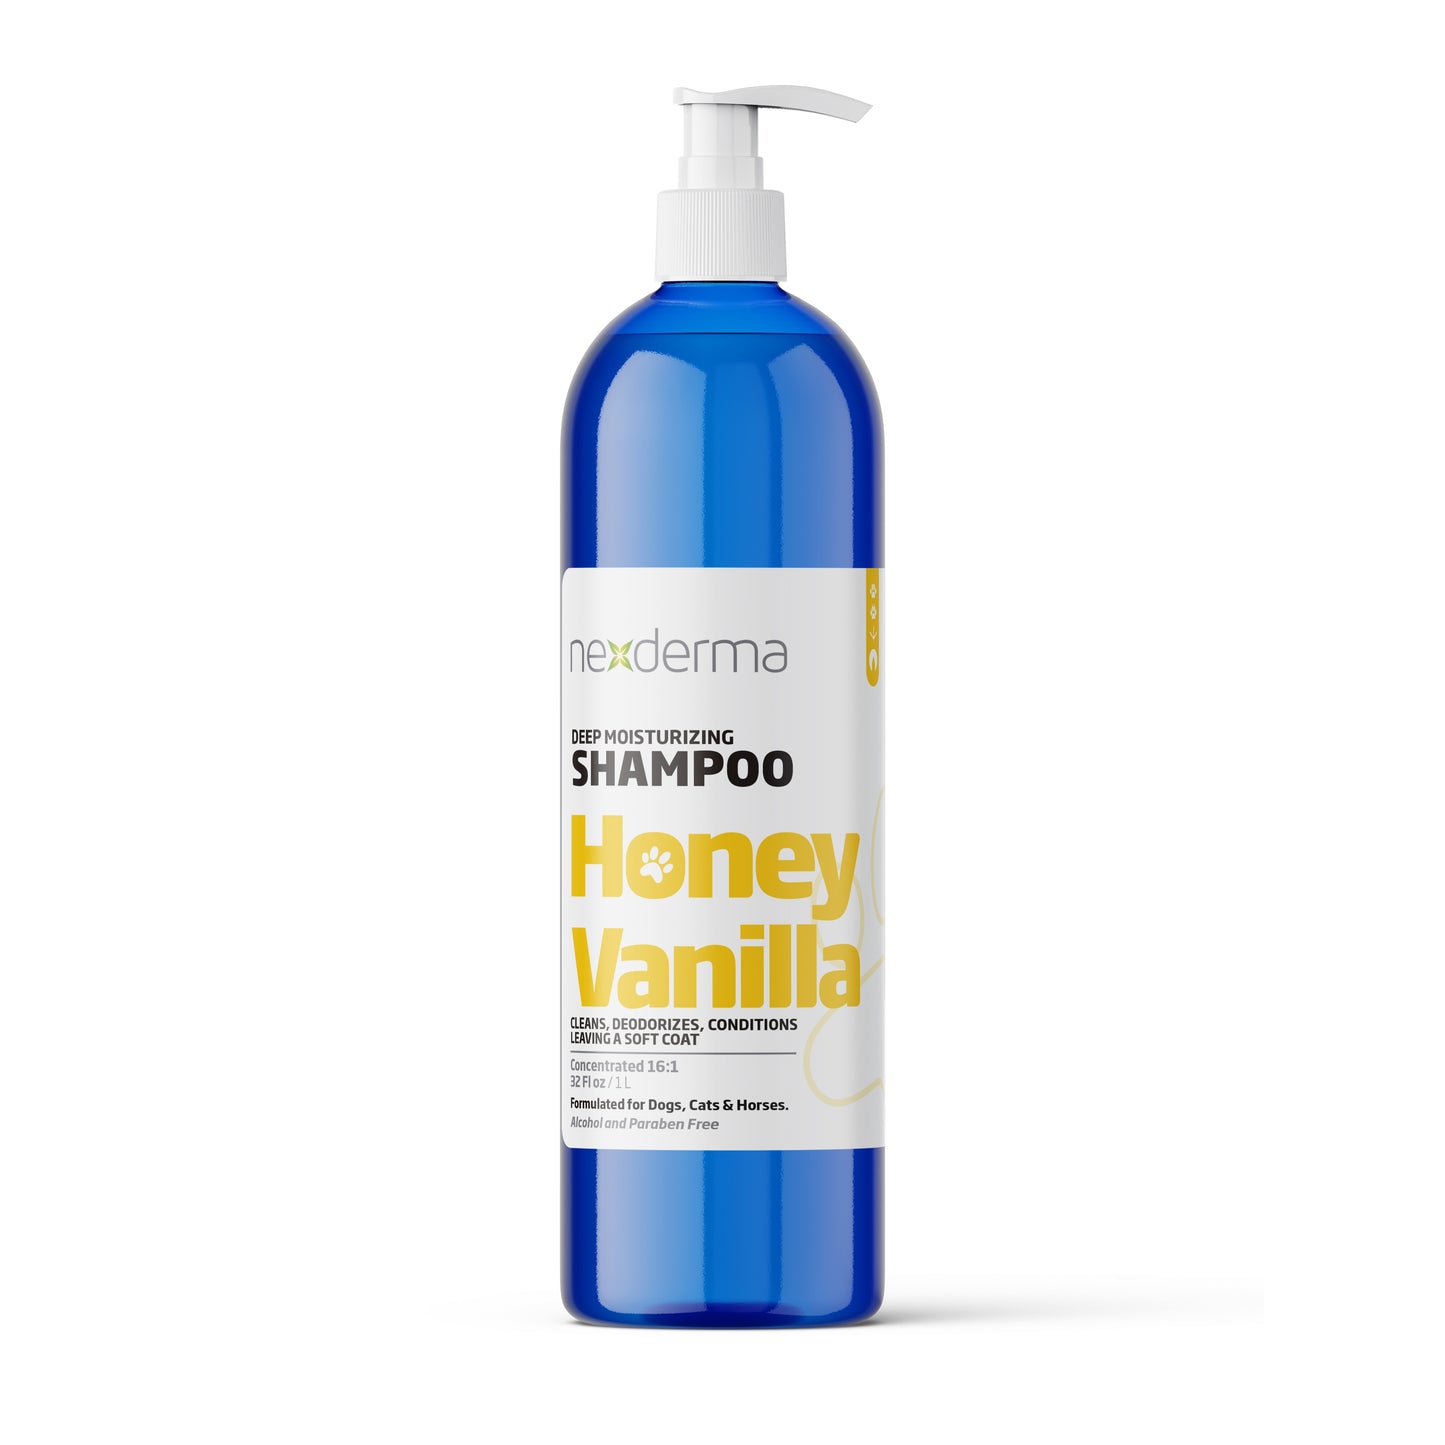 Deep Moisturizing Shampoo Honey Vanilla Scent